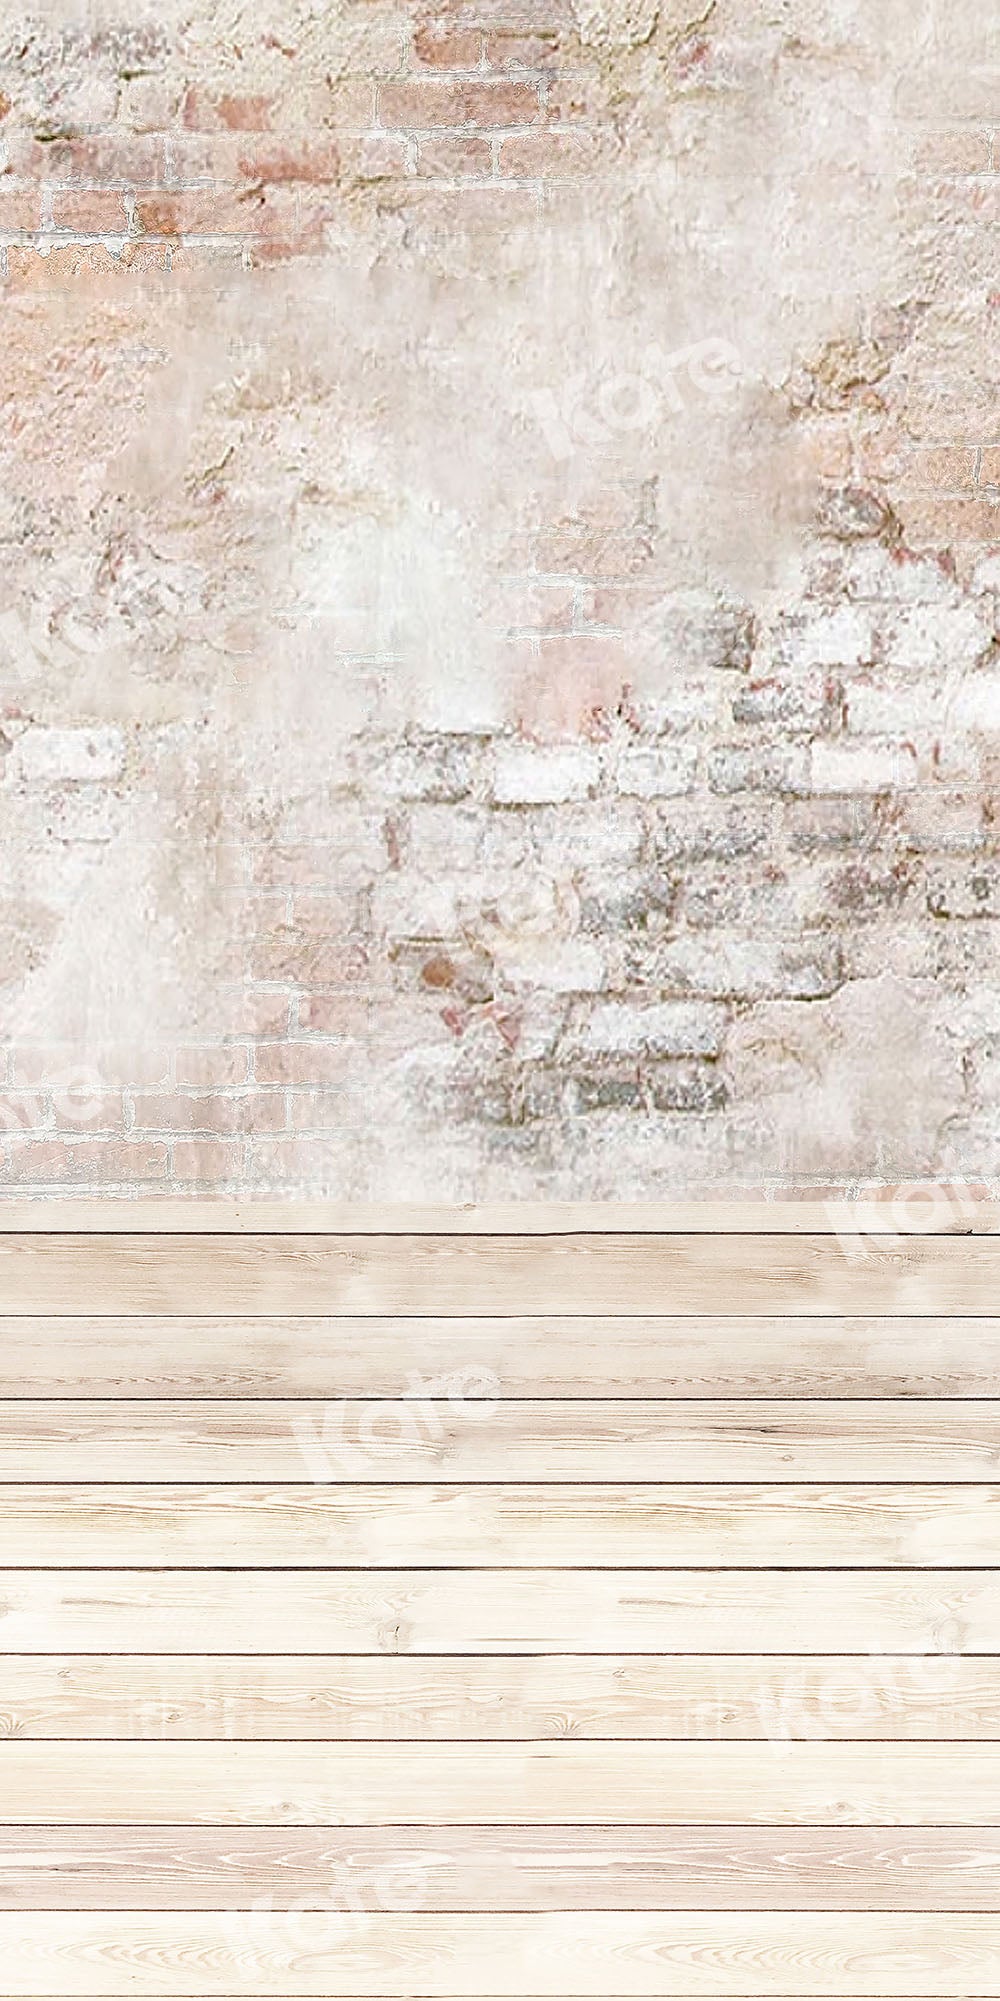 Kate 写真の背景の古いレンガの壁の木製の床を掃除します